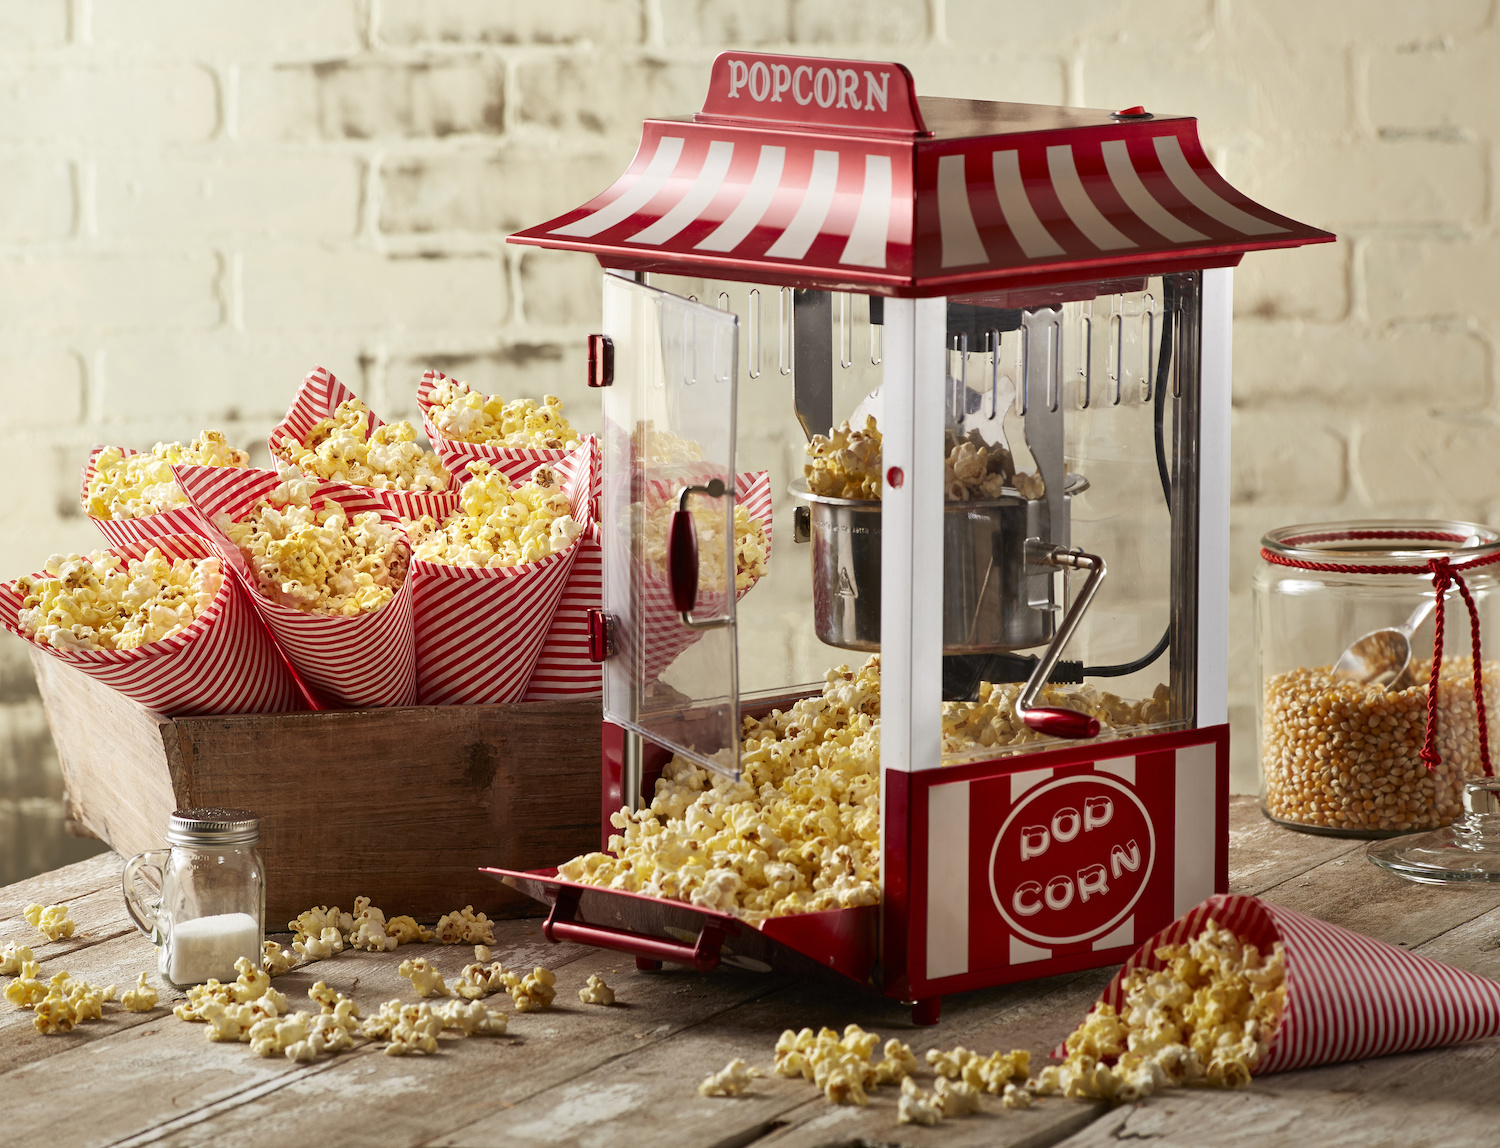 Is it Worth It to Buy a Popcorn Machine?